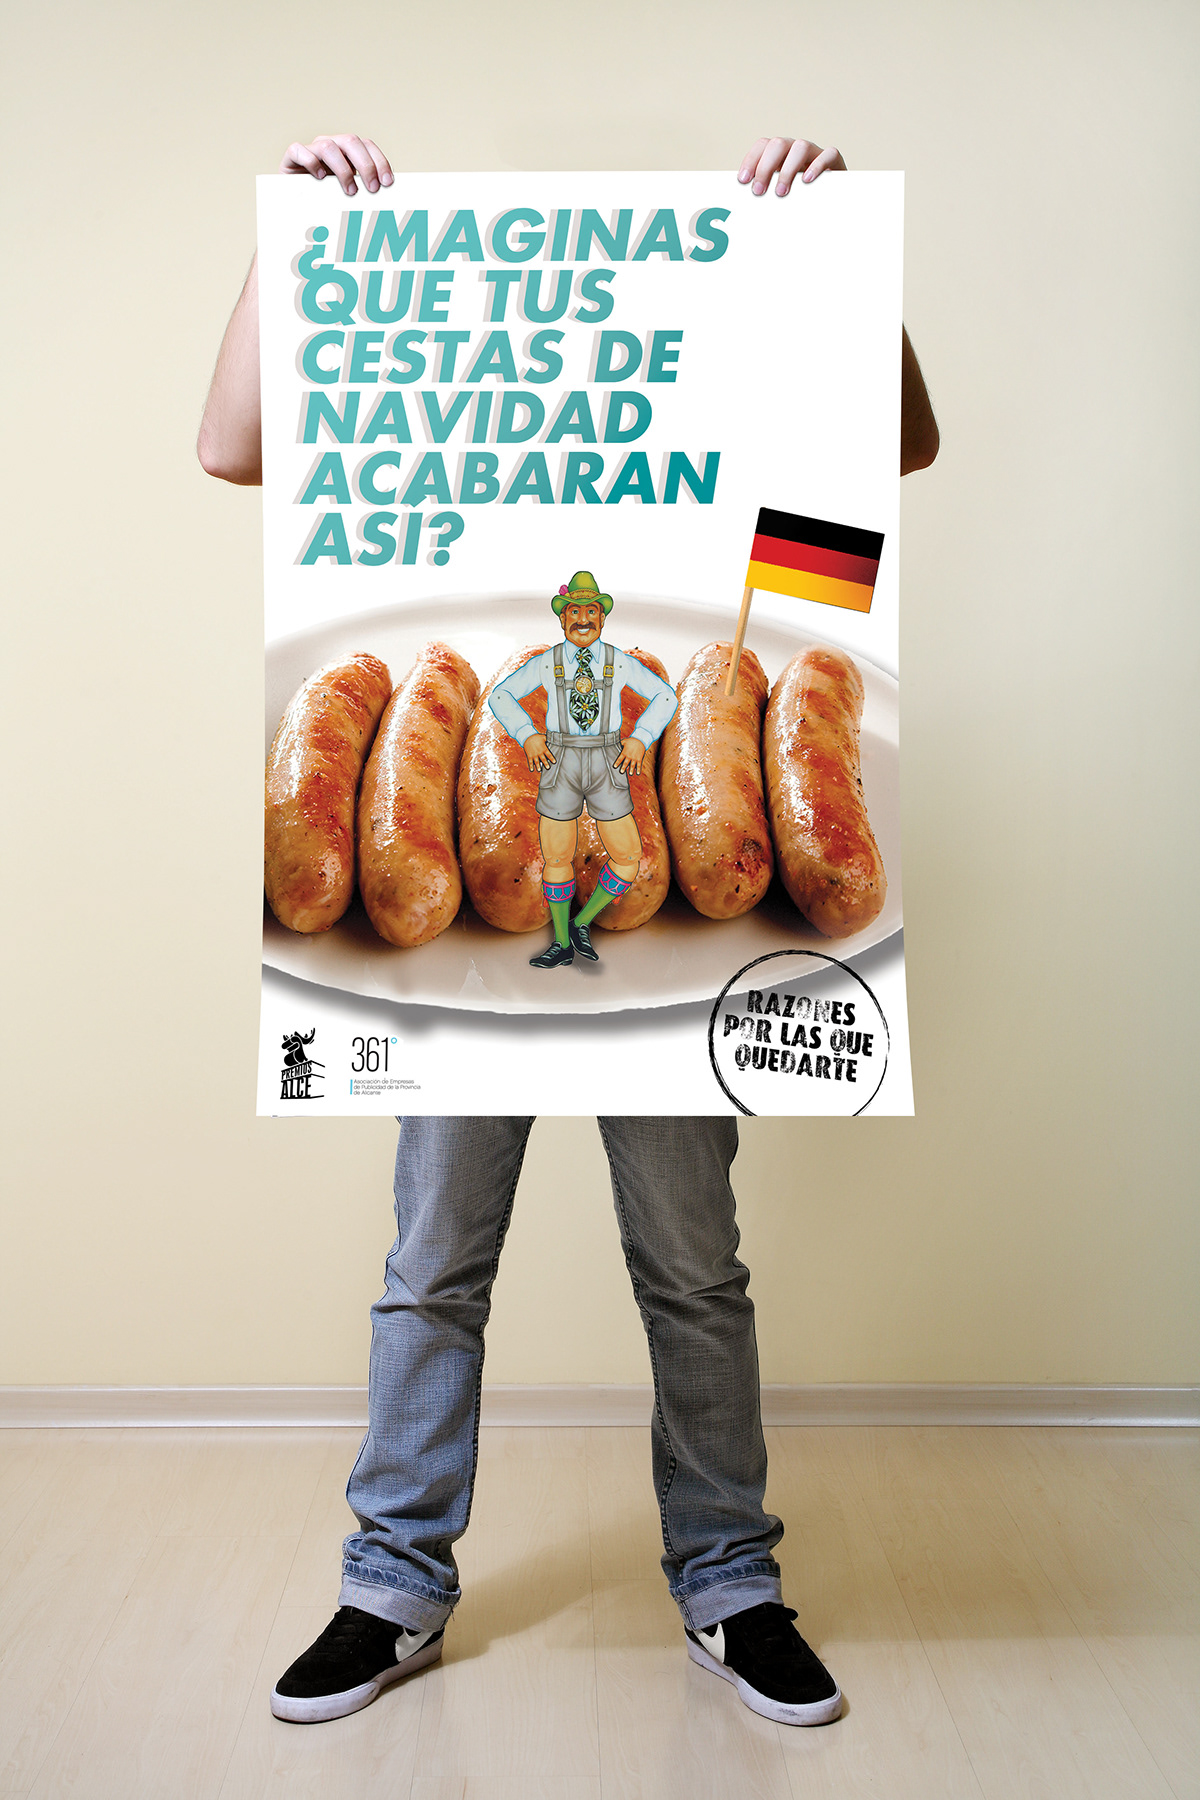 publicidad ad  concurso  alce  2013  contest  creativity   emigrate  Spain  billboard  young  student  job  Stay